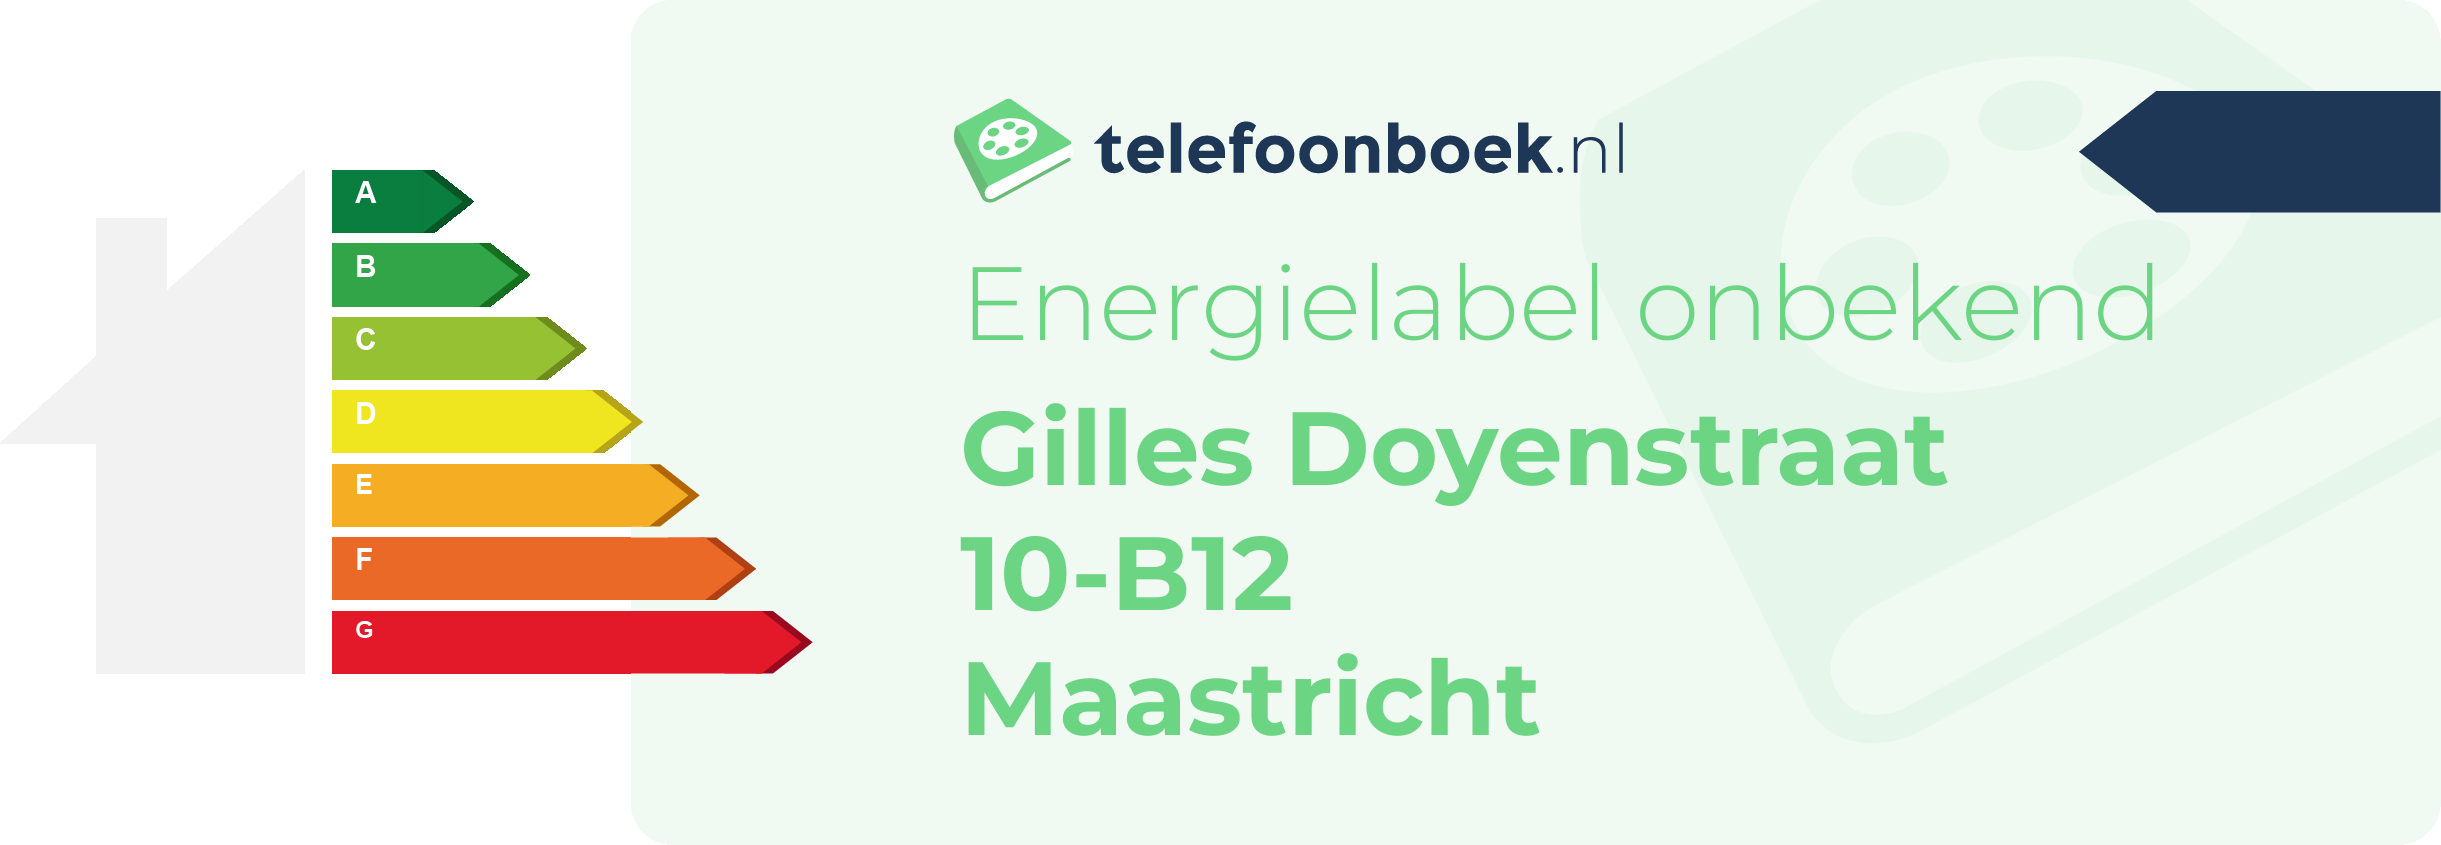 Energielabel Gilles Doyenstraat 10-B12 Maastricht